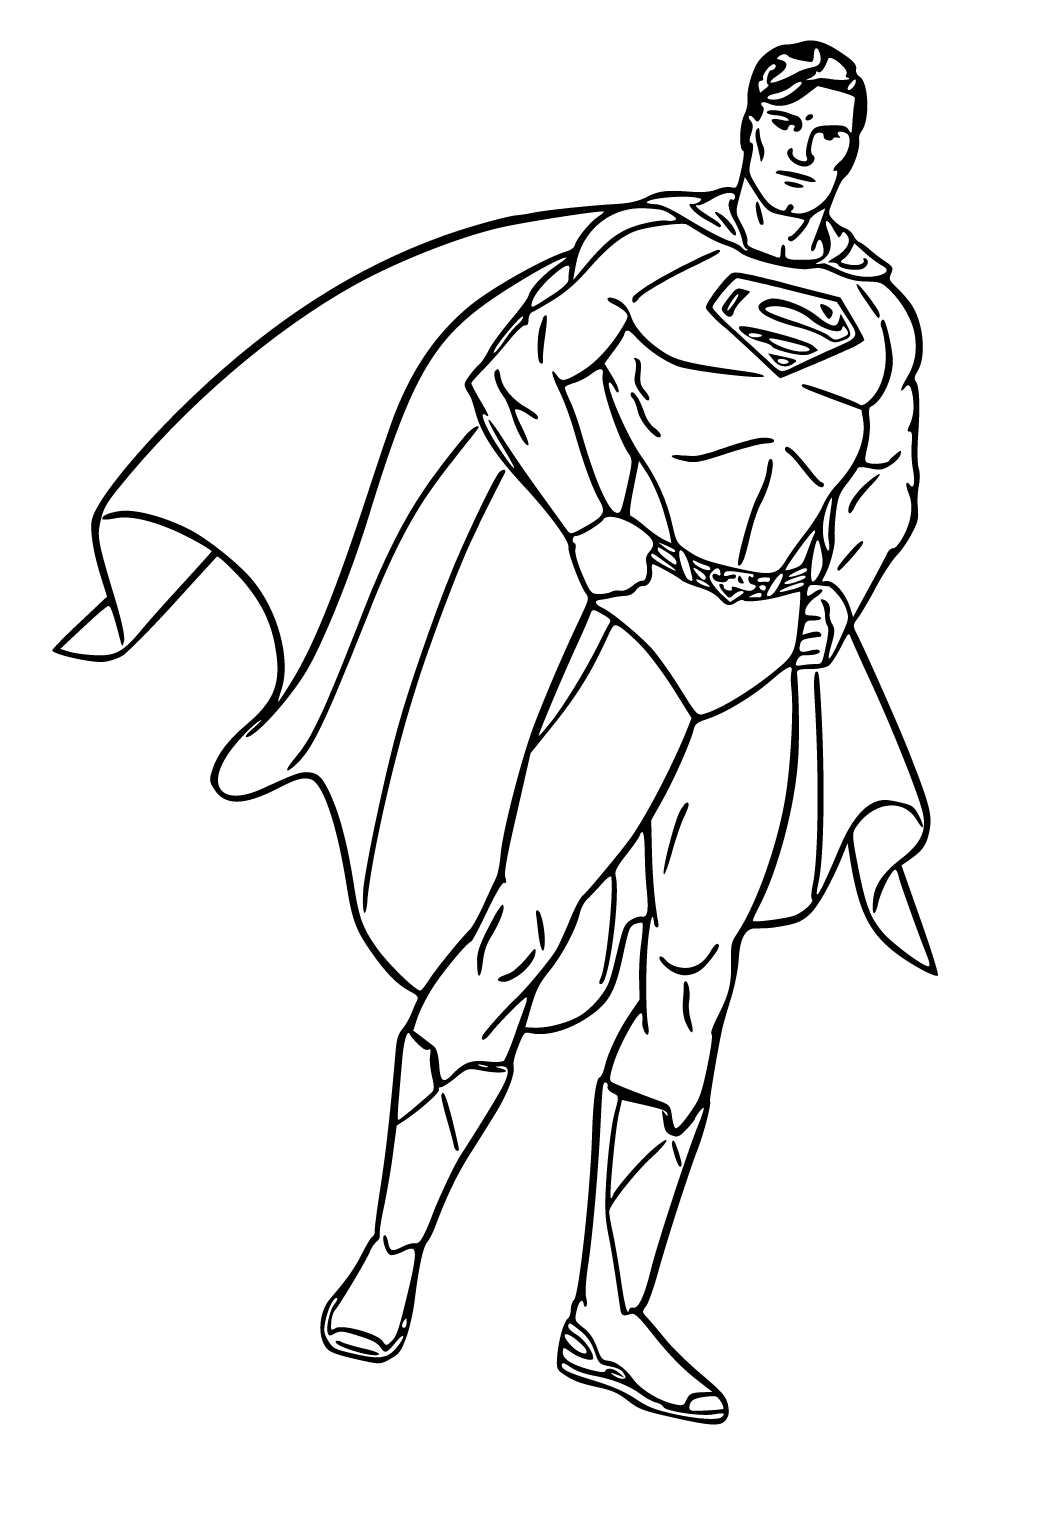 Supermann